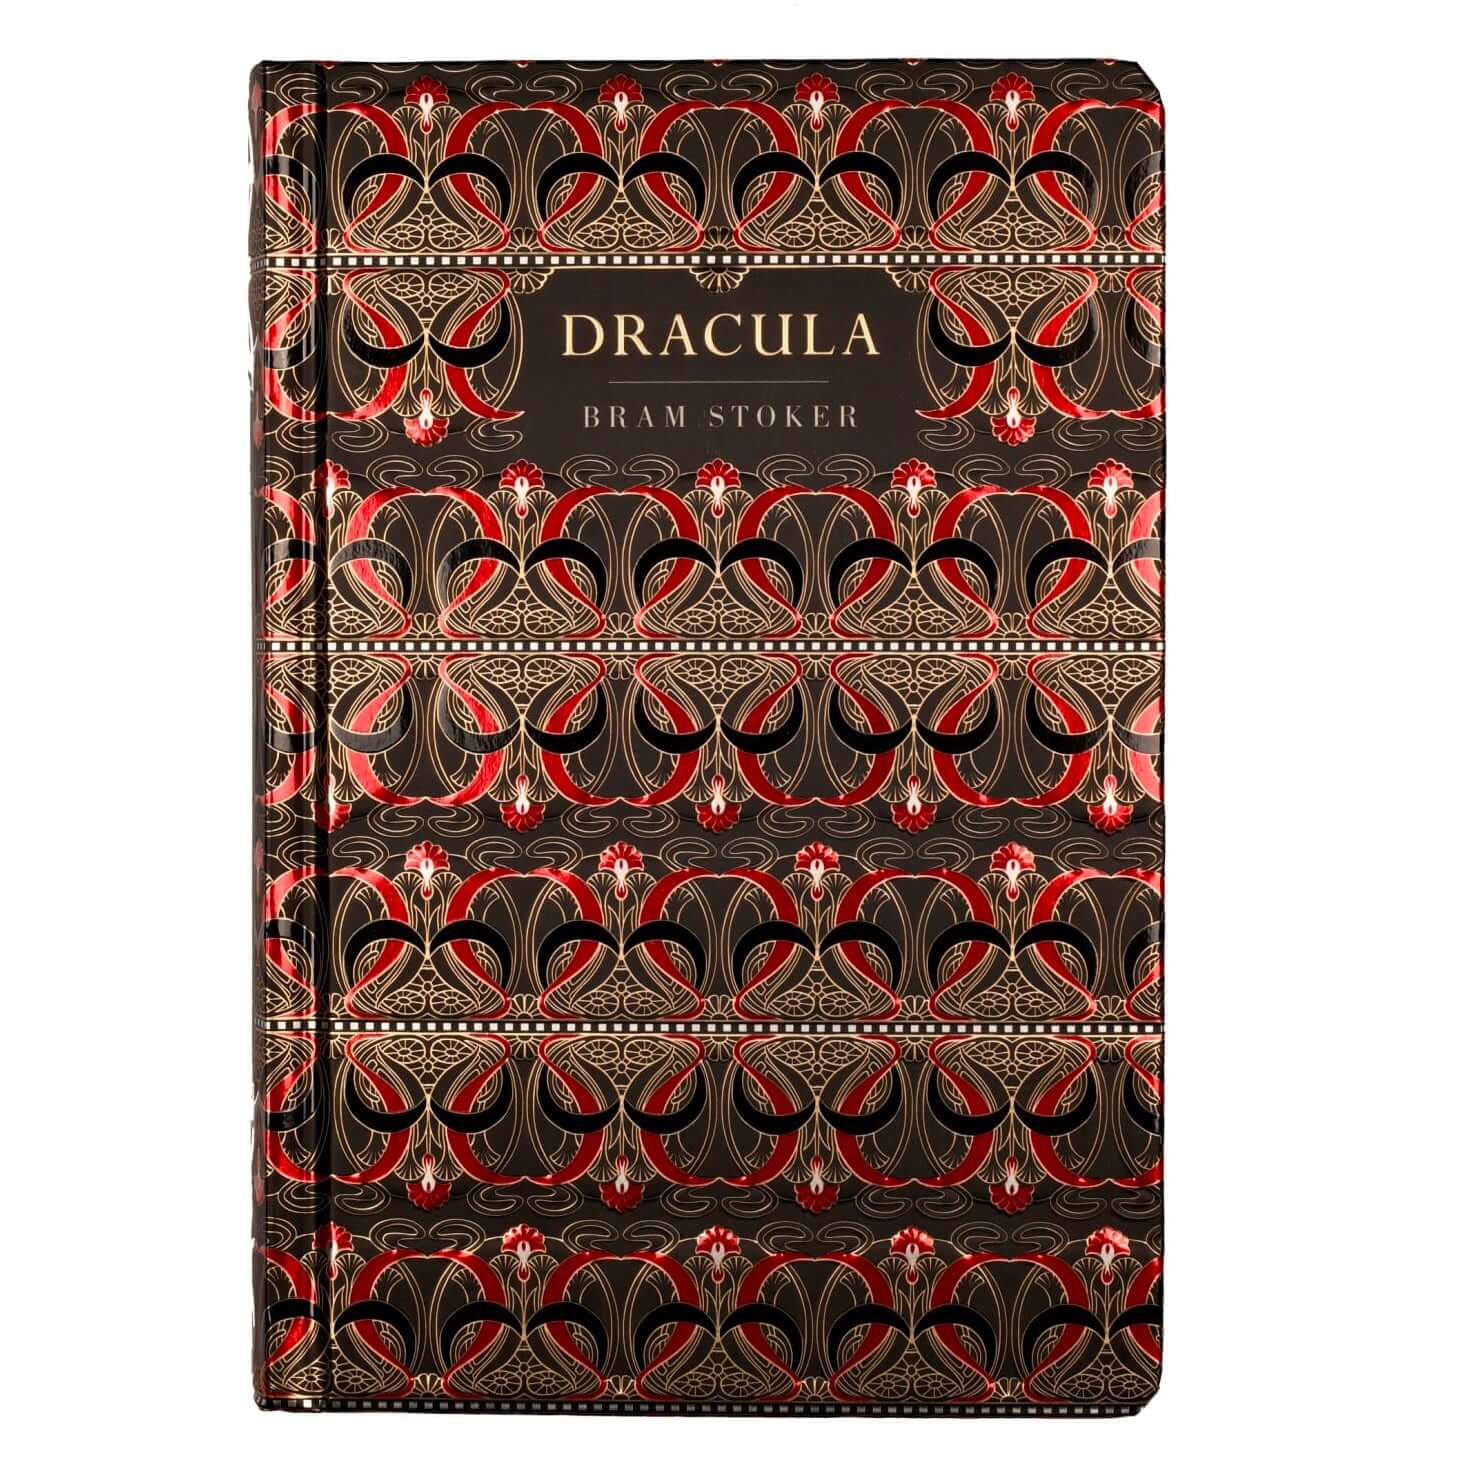 Dracula - Bram Stoker - Chiltern Classic Edition